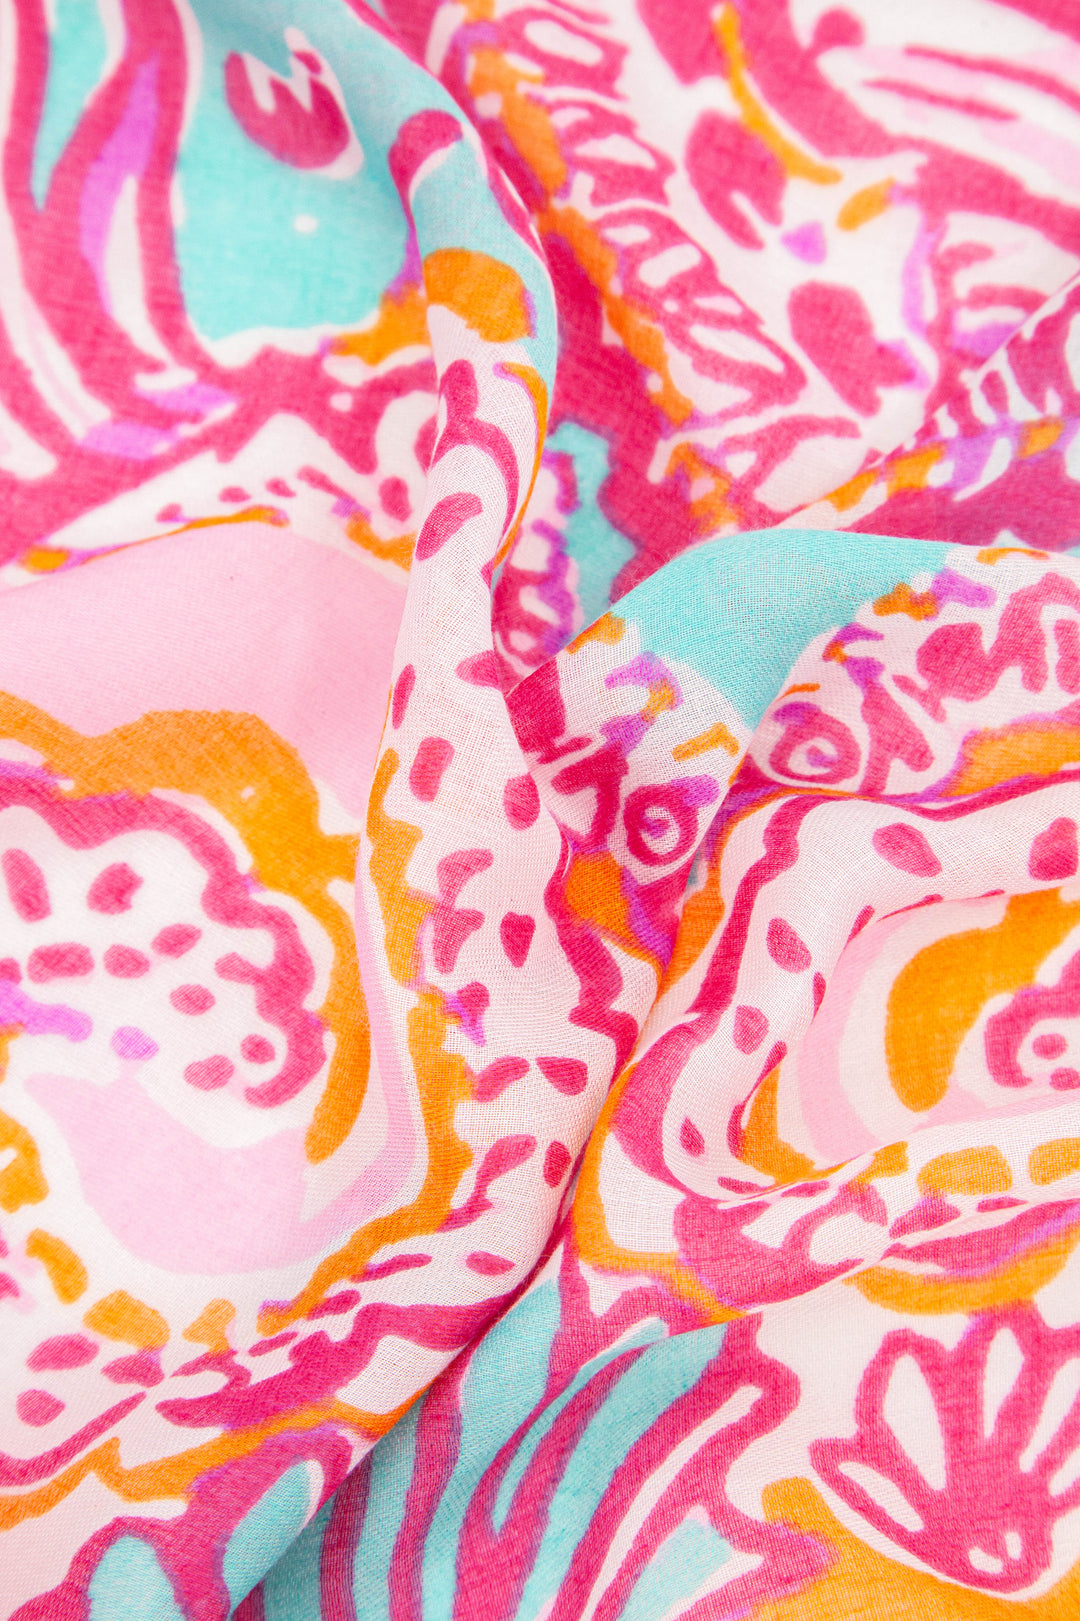 close up of the pink ornate seashell pattern